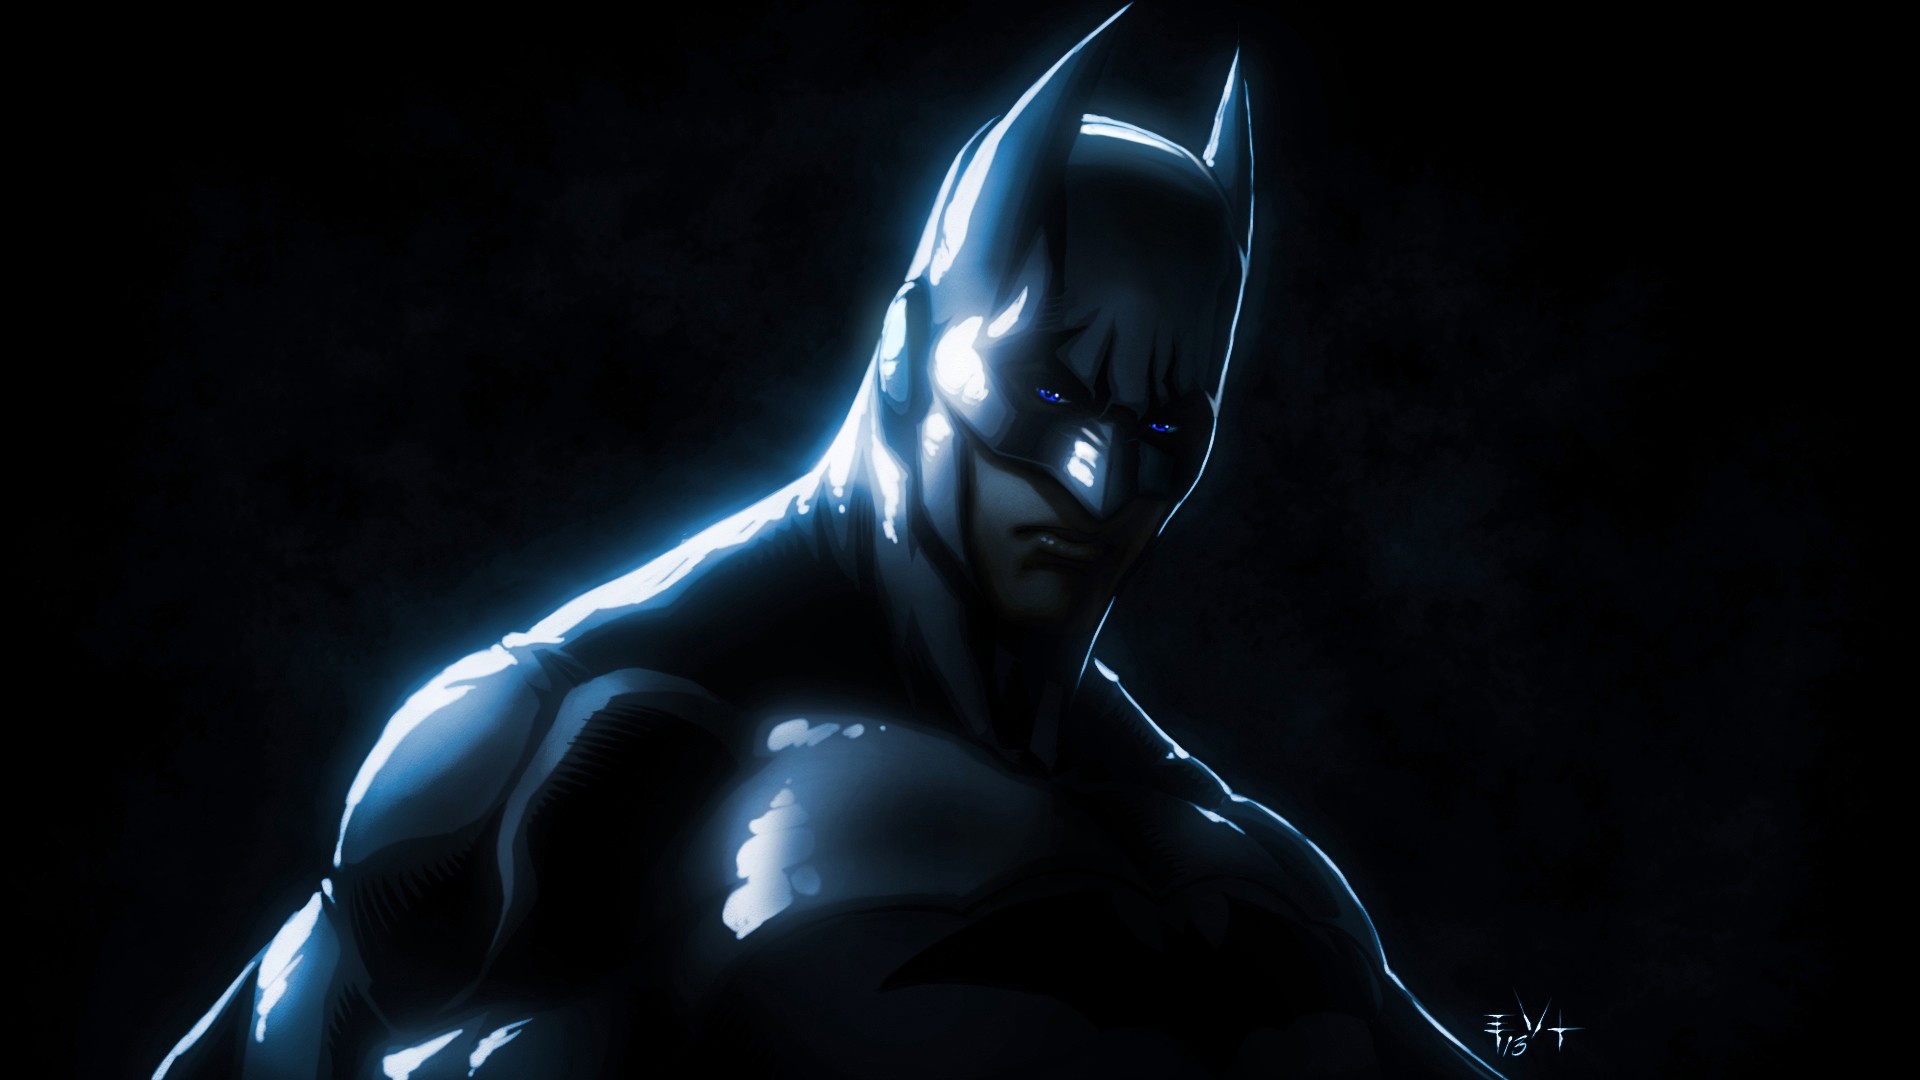 Batman Full HD Wallpaper and Background Image | 1920x1080 | ID:405894